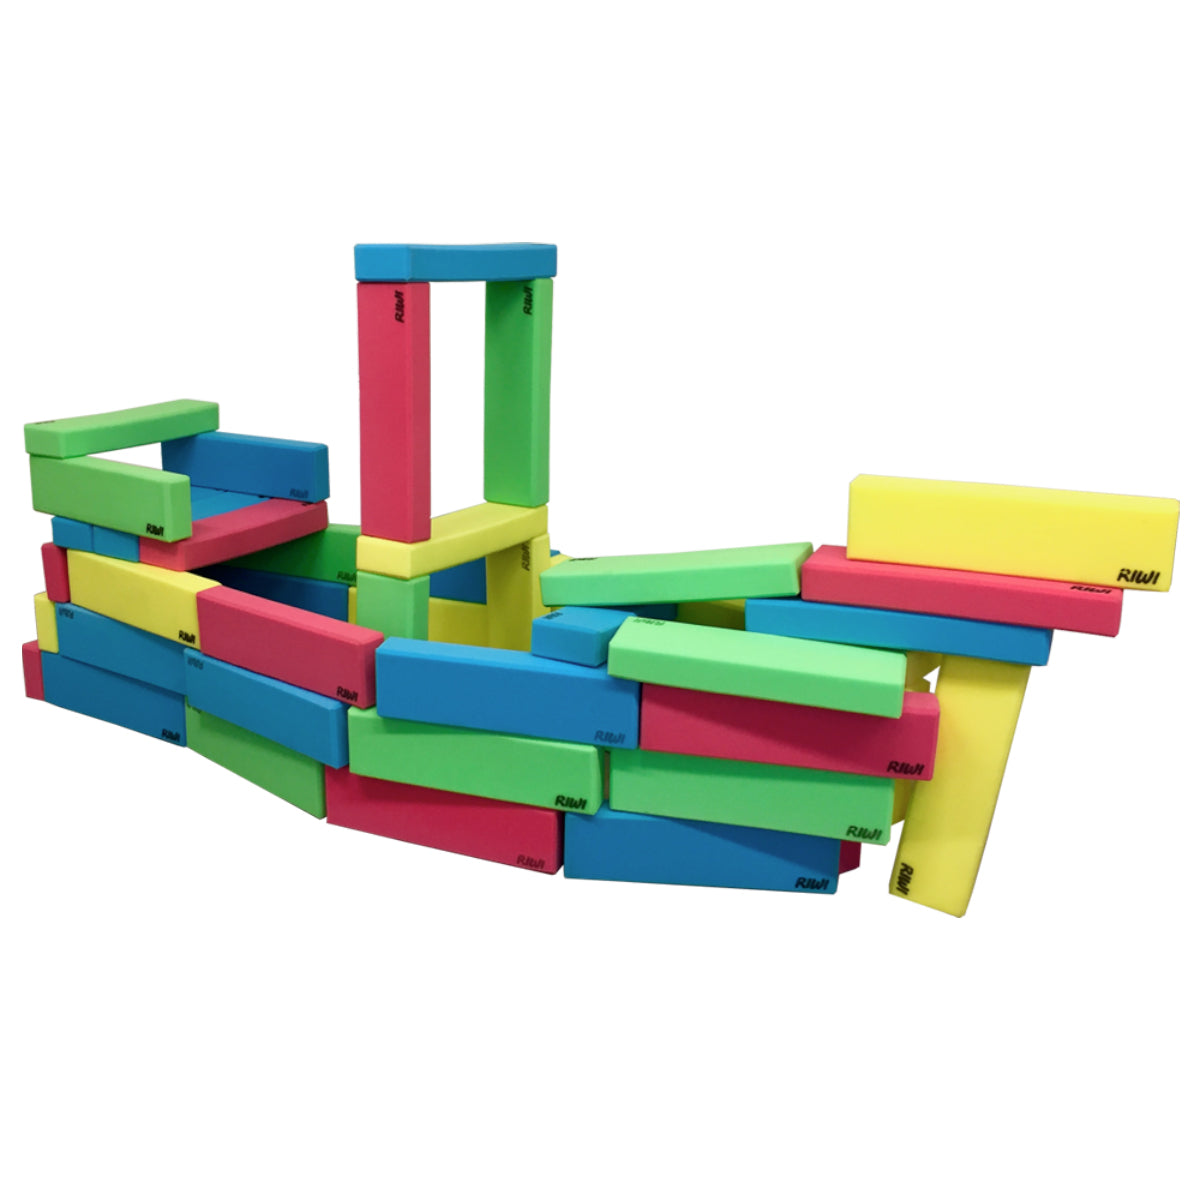 RIWI building blocks ship pirate soft foam blocks xxl giant bricks for kids creative play